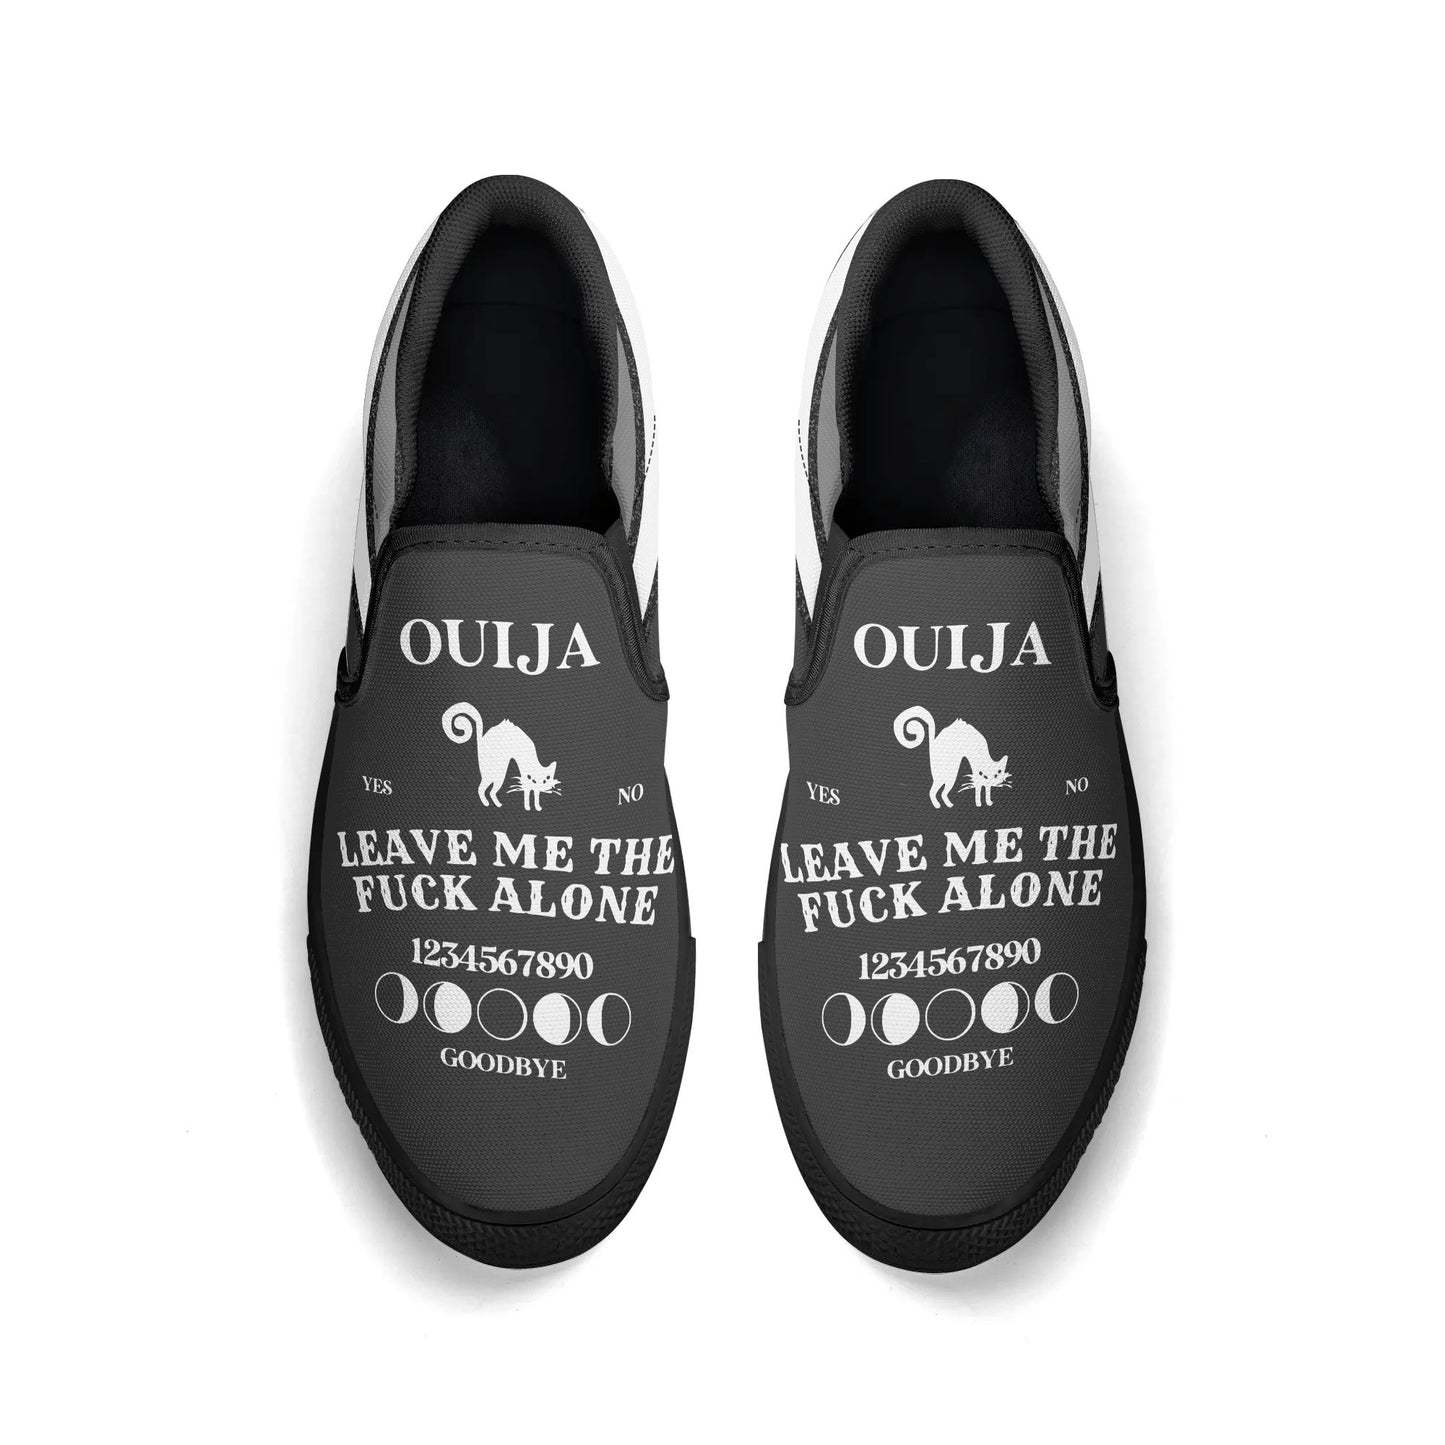 Ouija Women's Slip On Shoes